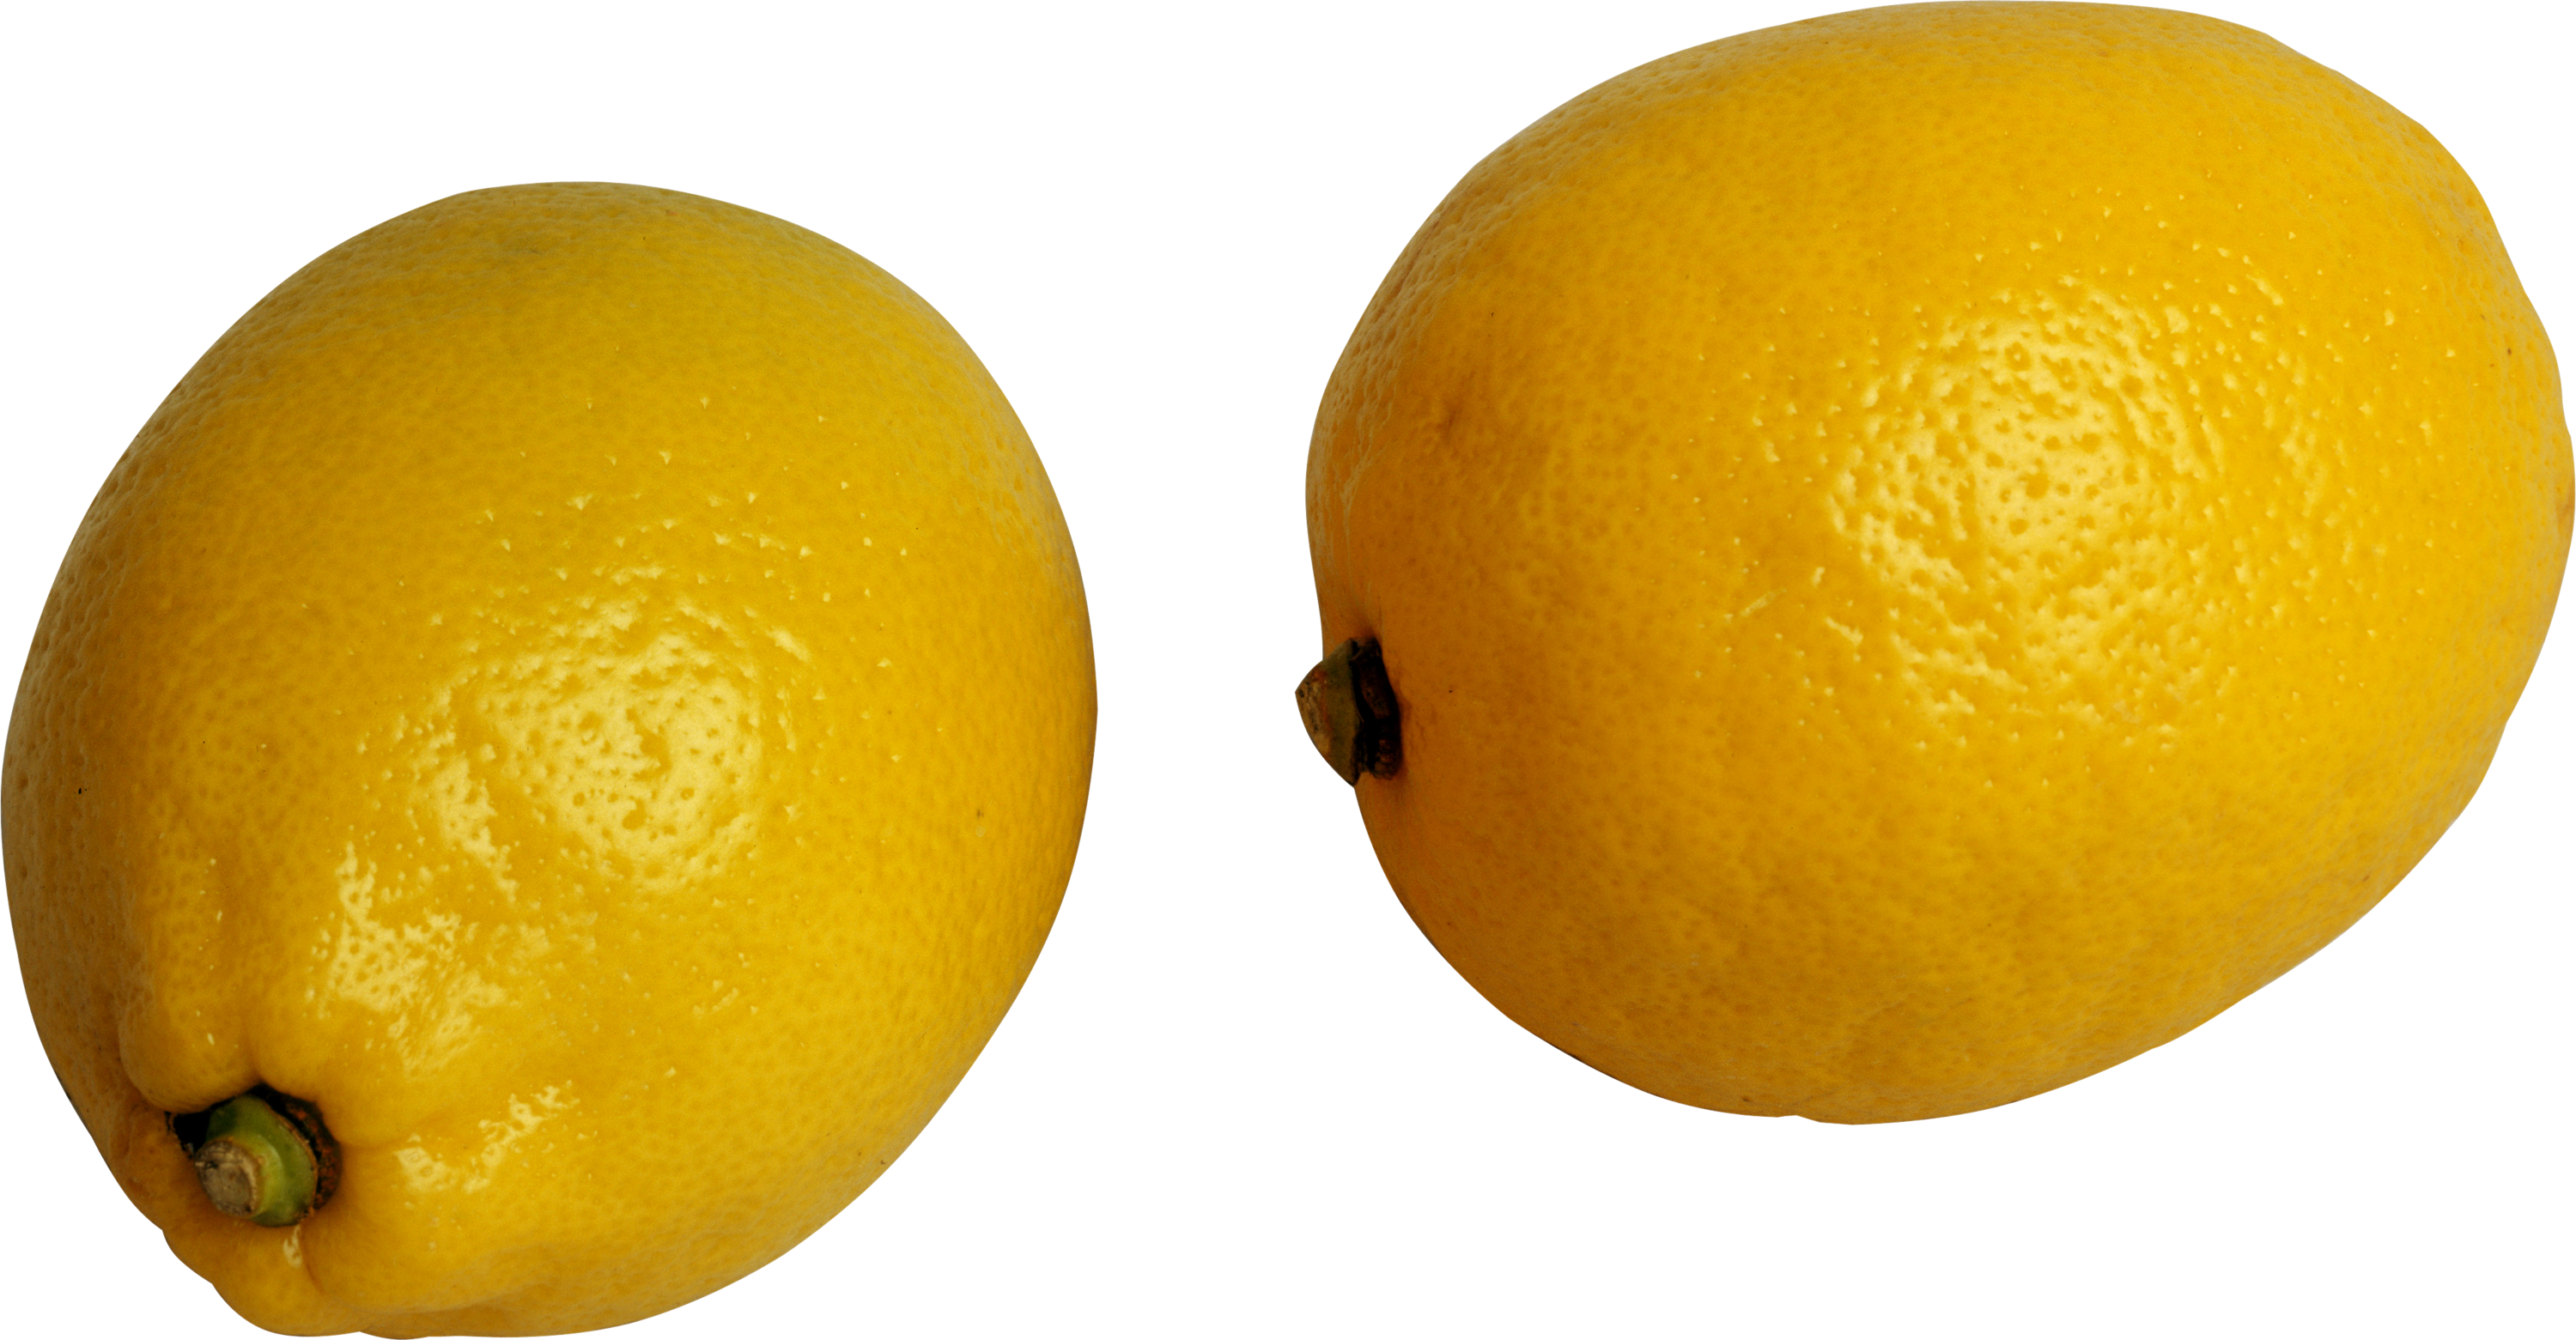 Lemon PNG images image